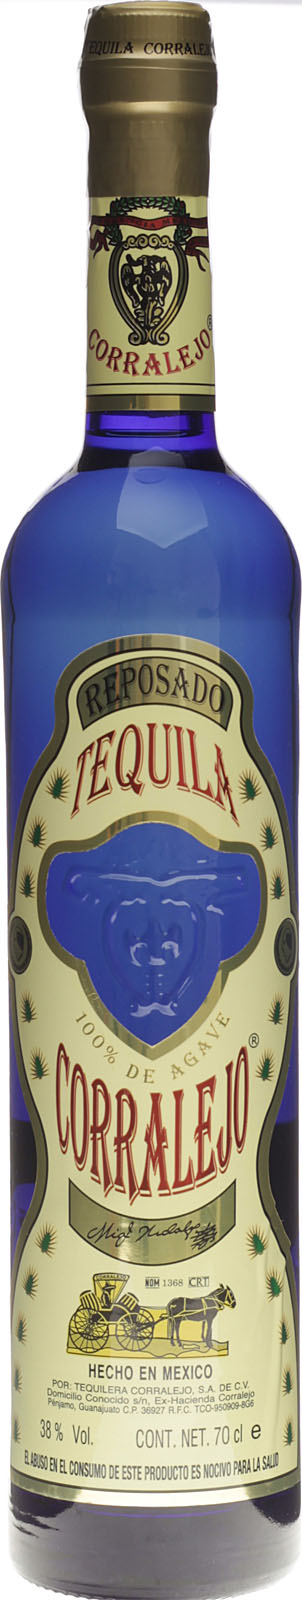 Corralejo Reposado Tequila hier im Onlineshop kaufen